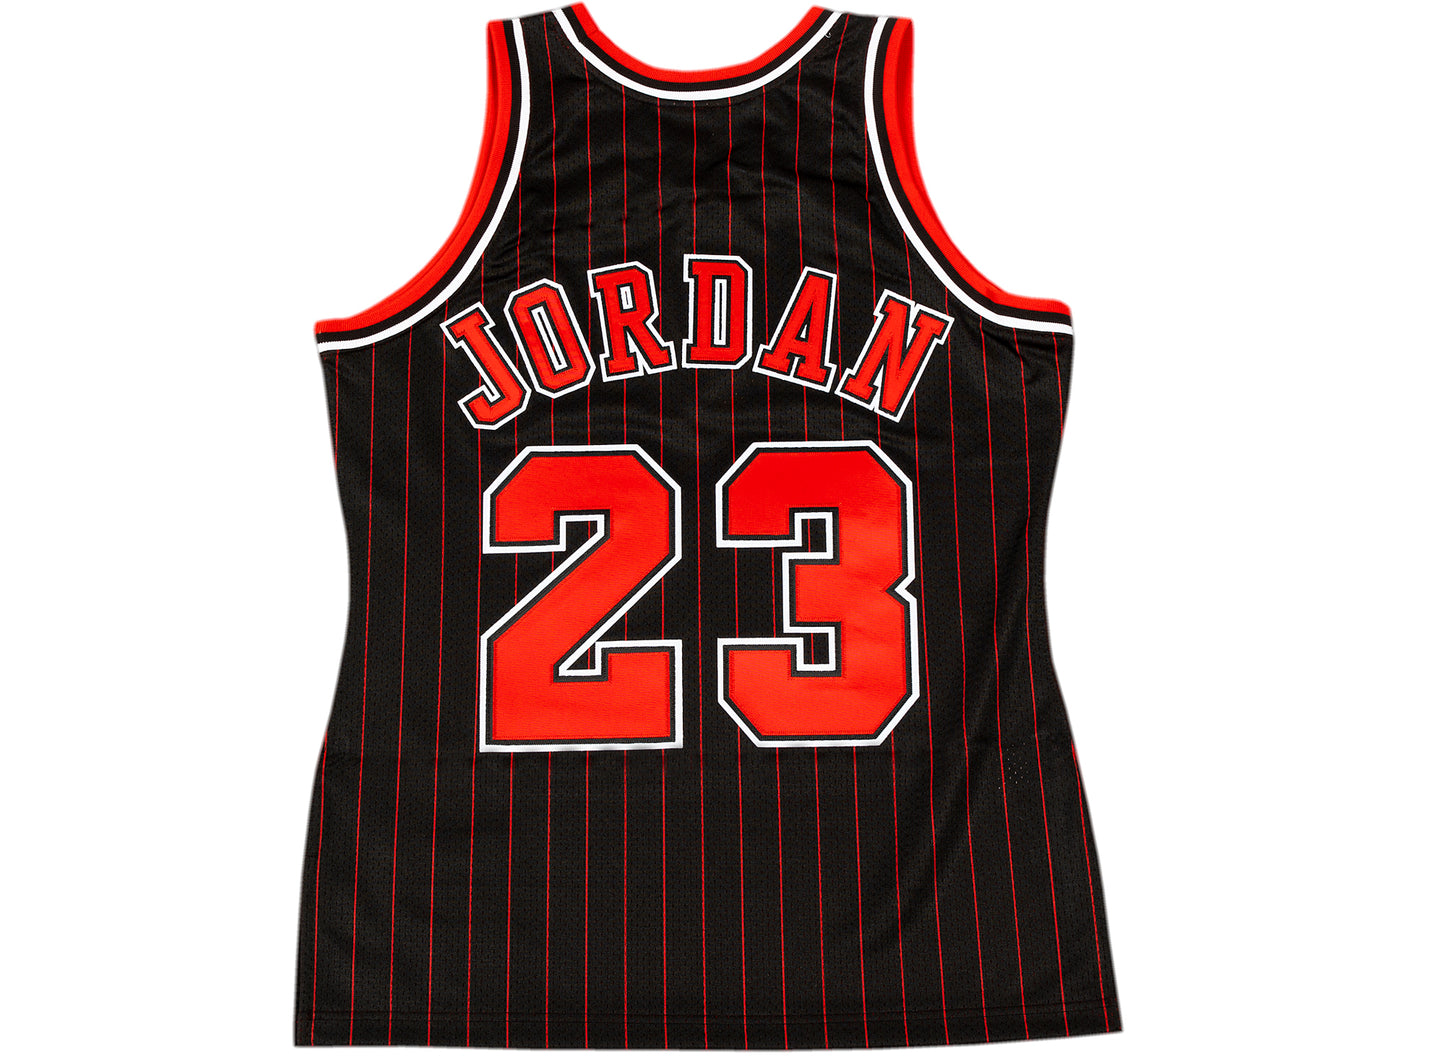 Mitchell & Ness NBA Michael Jordan Authentic Bulls 96 Alternate Jersey